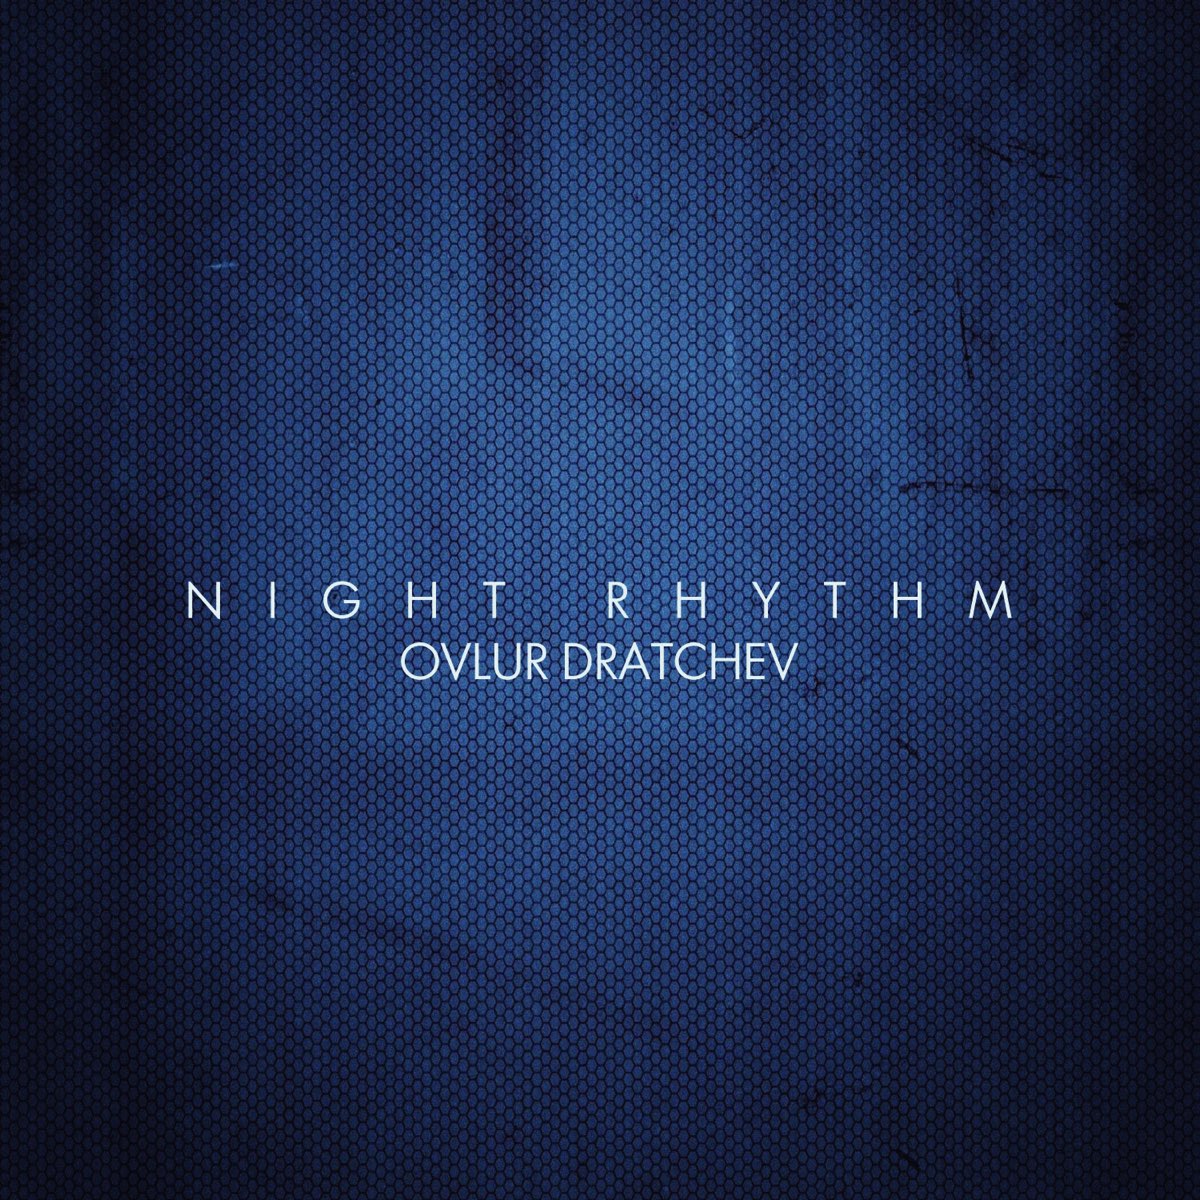 Night rhythm original mix